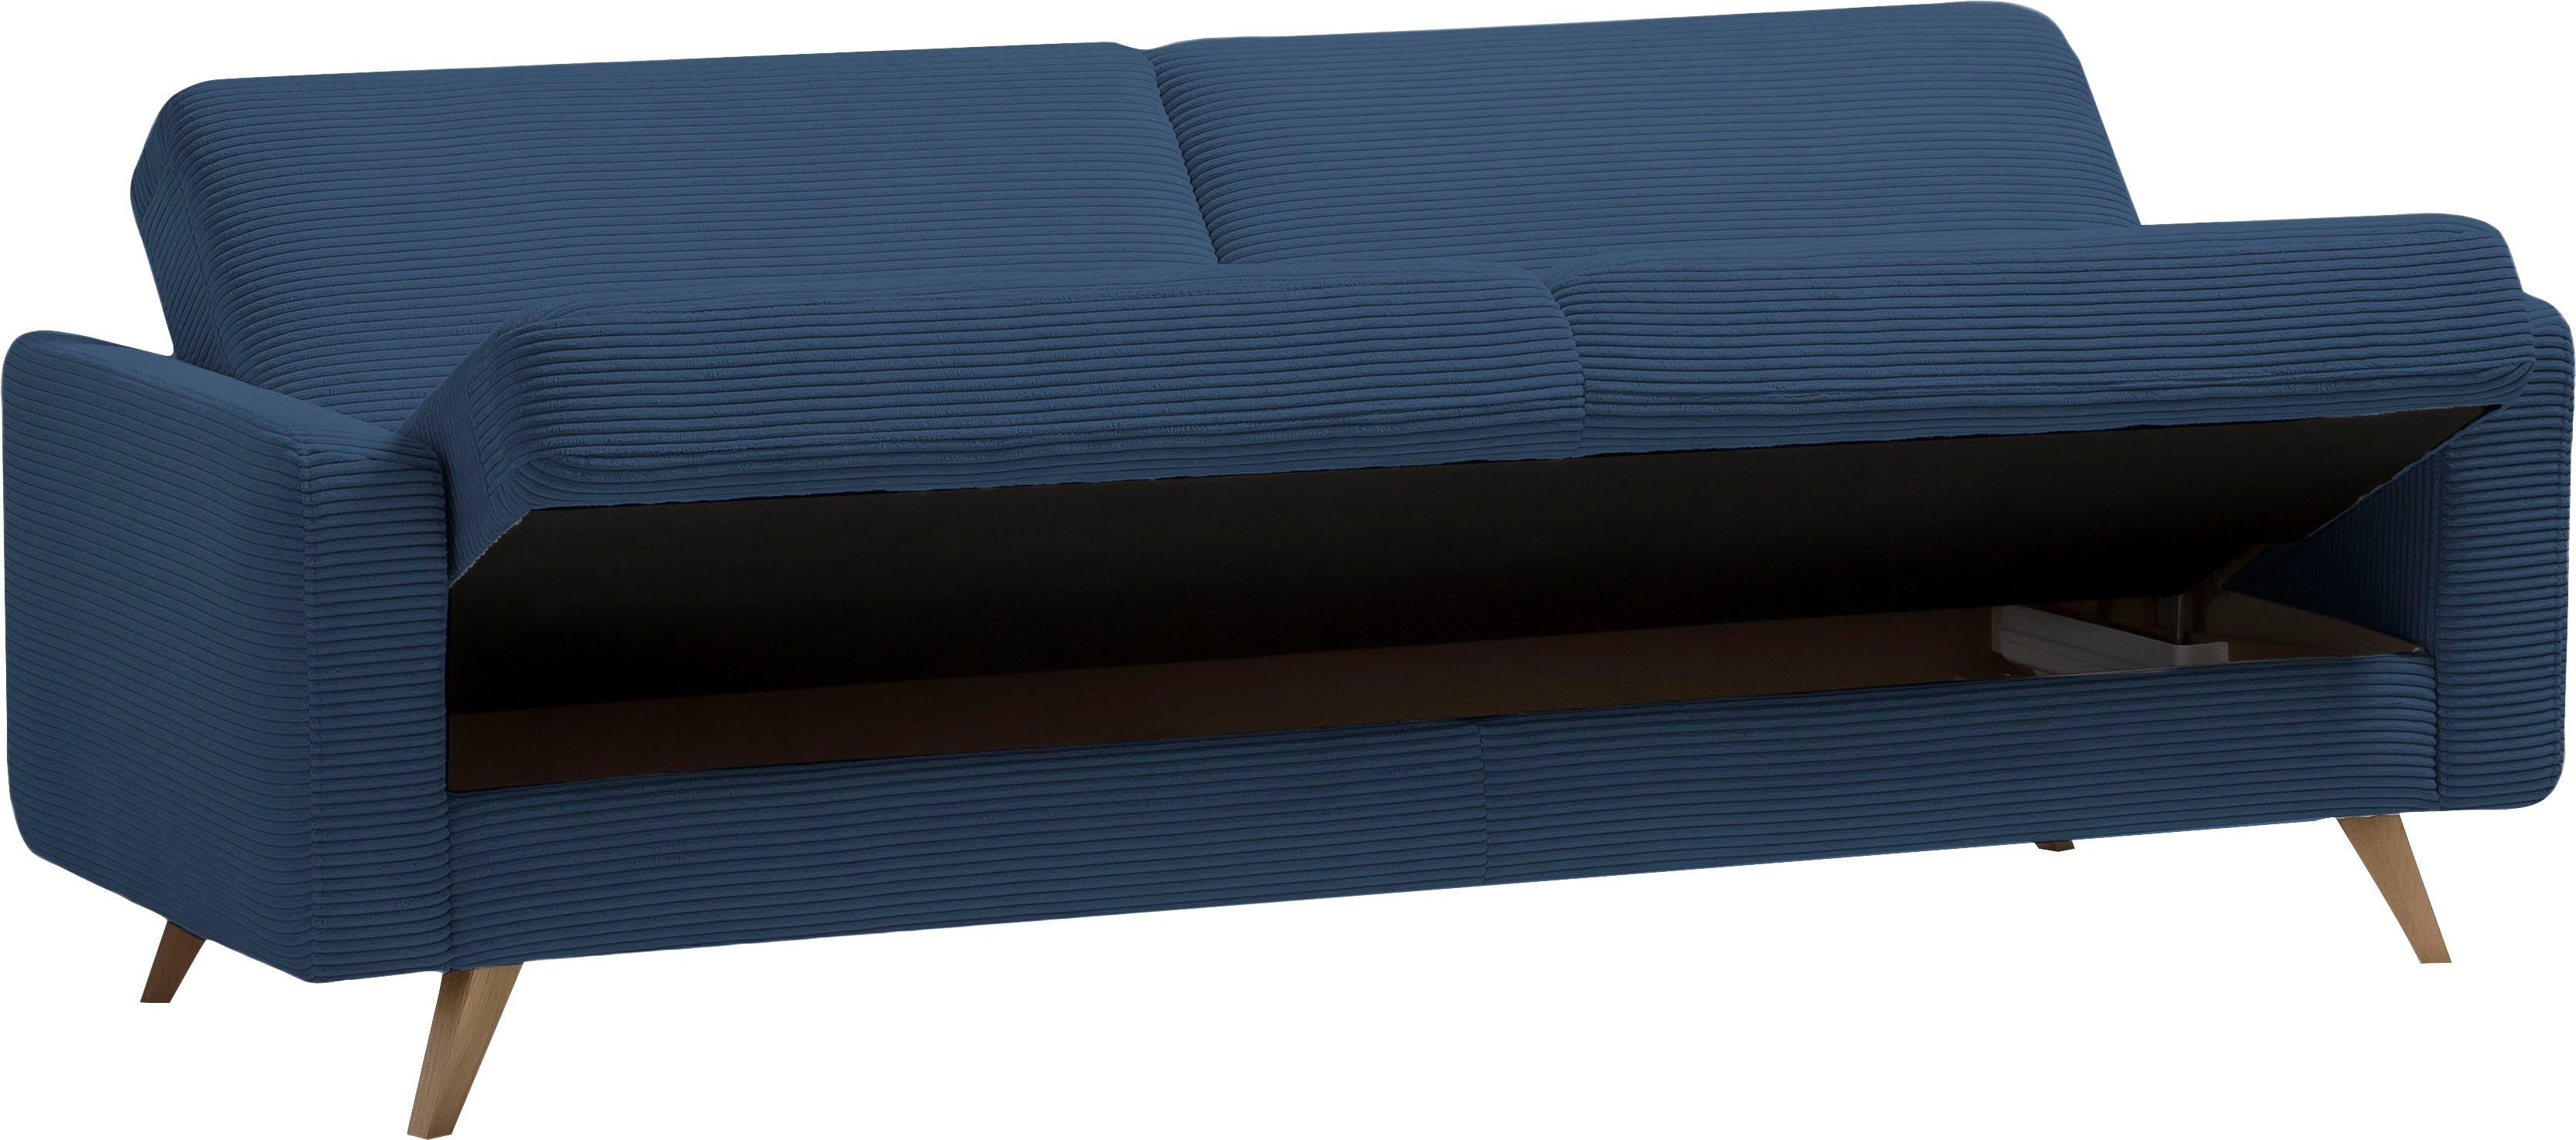 Bettkasten 3-Sitzer und Bettfunktion fashion sofa navy Samso, - Inklusive exxpo